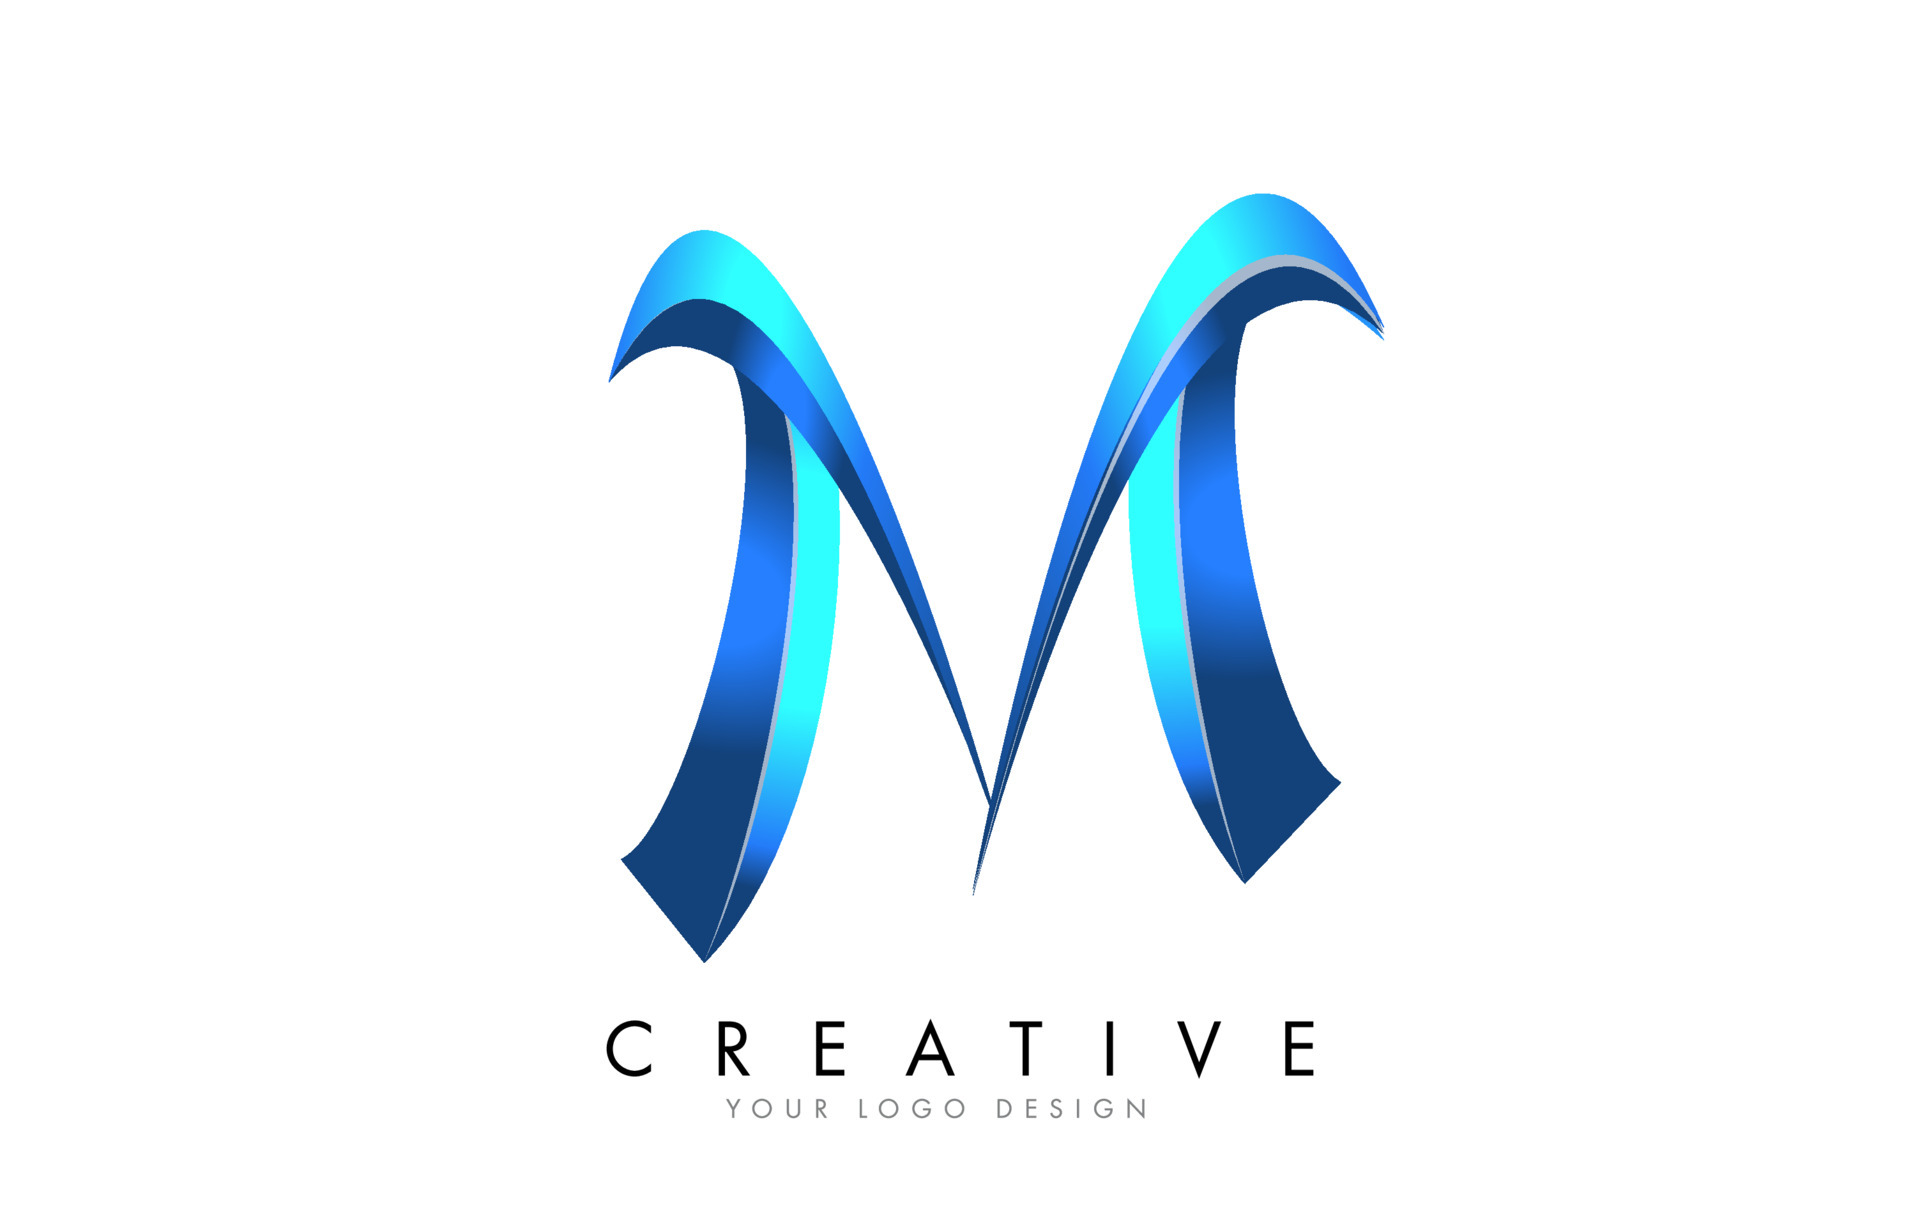 Creative m